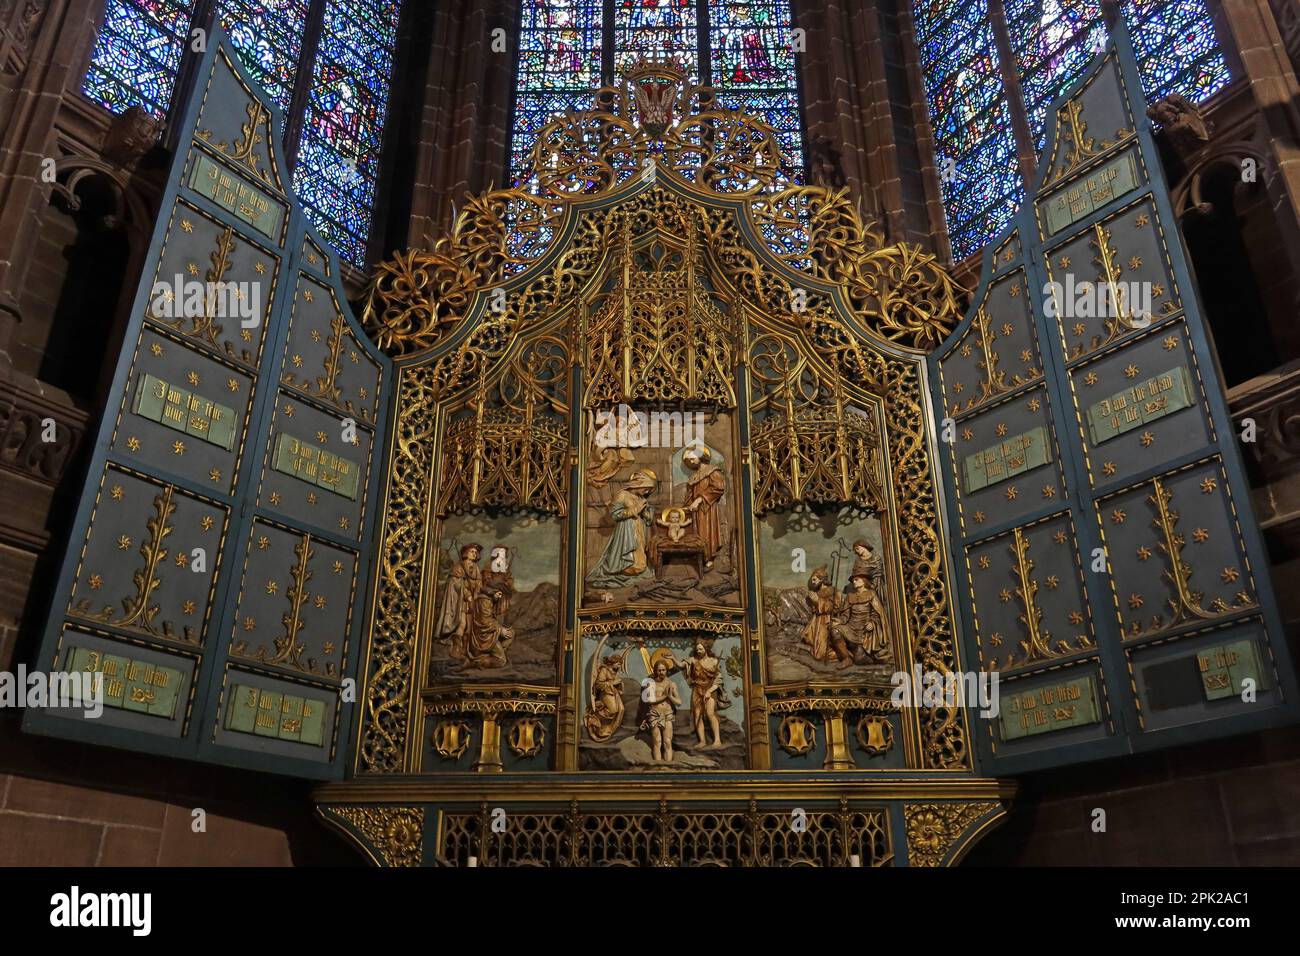 Scotts Lady Chapel, Altar, anglikanische Kathedrale Liverpool, St. James' Mount, Liverpool, Merseyside, England, Großbritannien, L1 7AZ Stockfoto